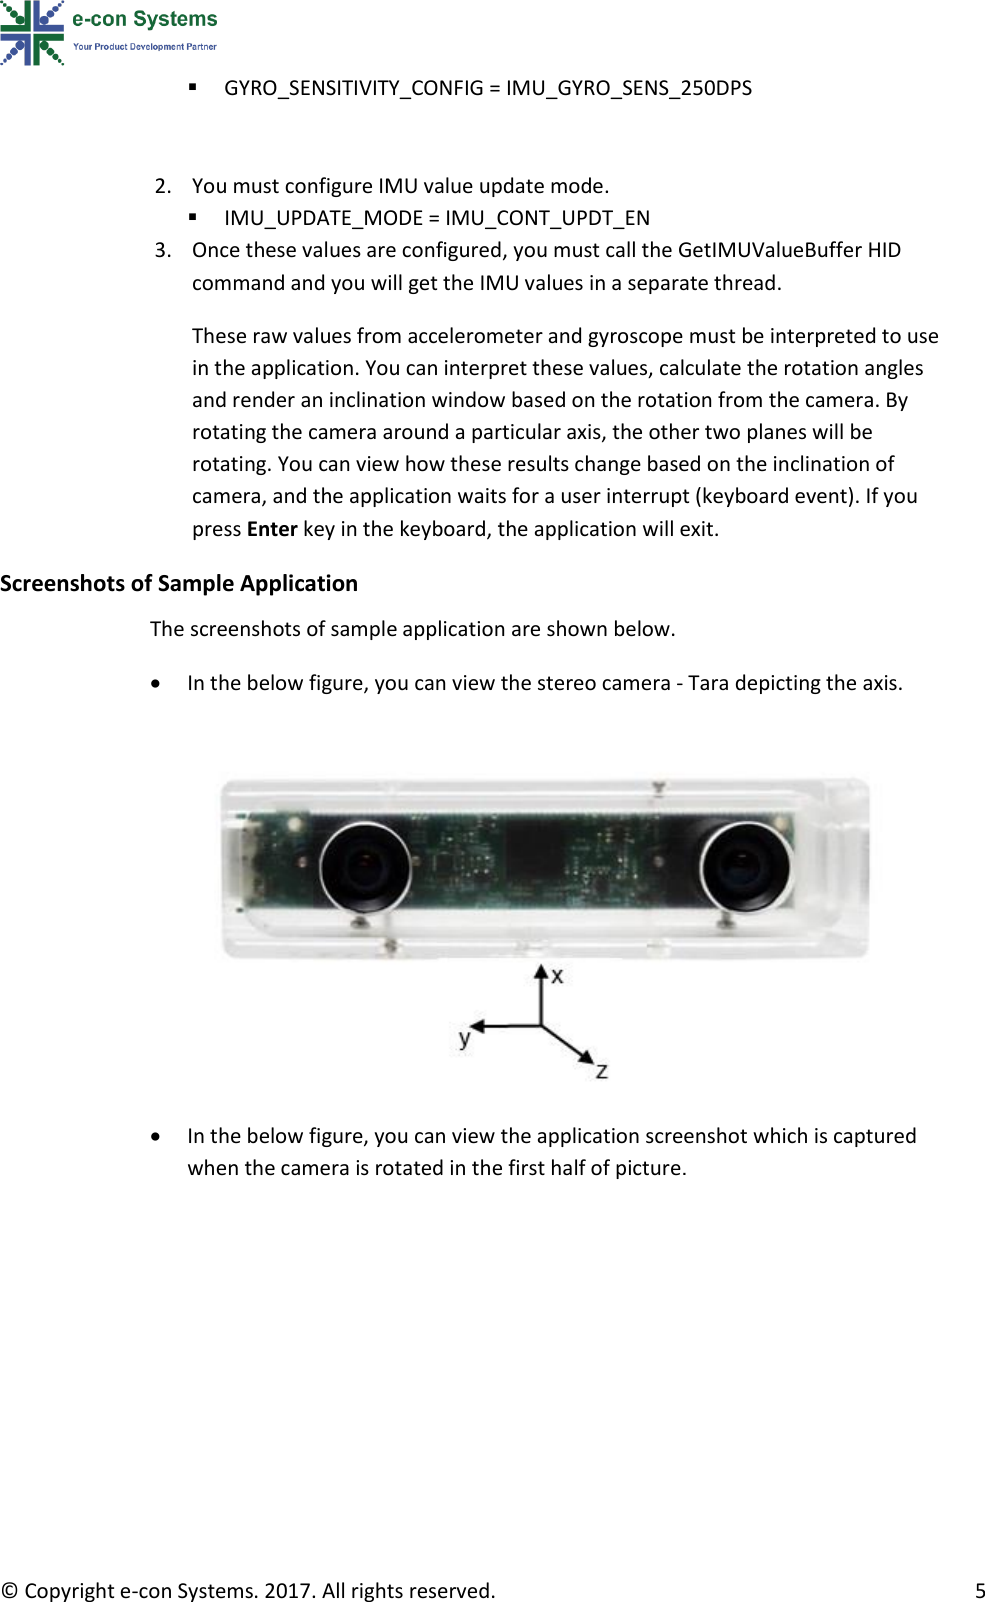 Page 6 of 11 - See3CAM Stereo TARA IMU Sample App User Manual Rev 1 2